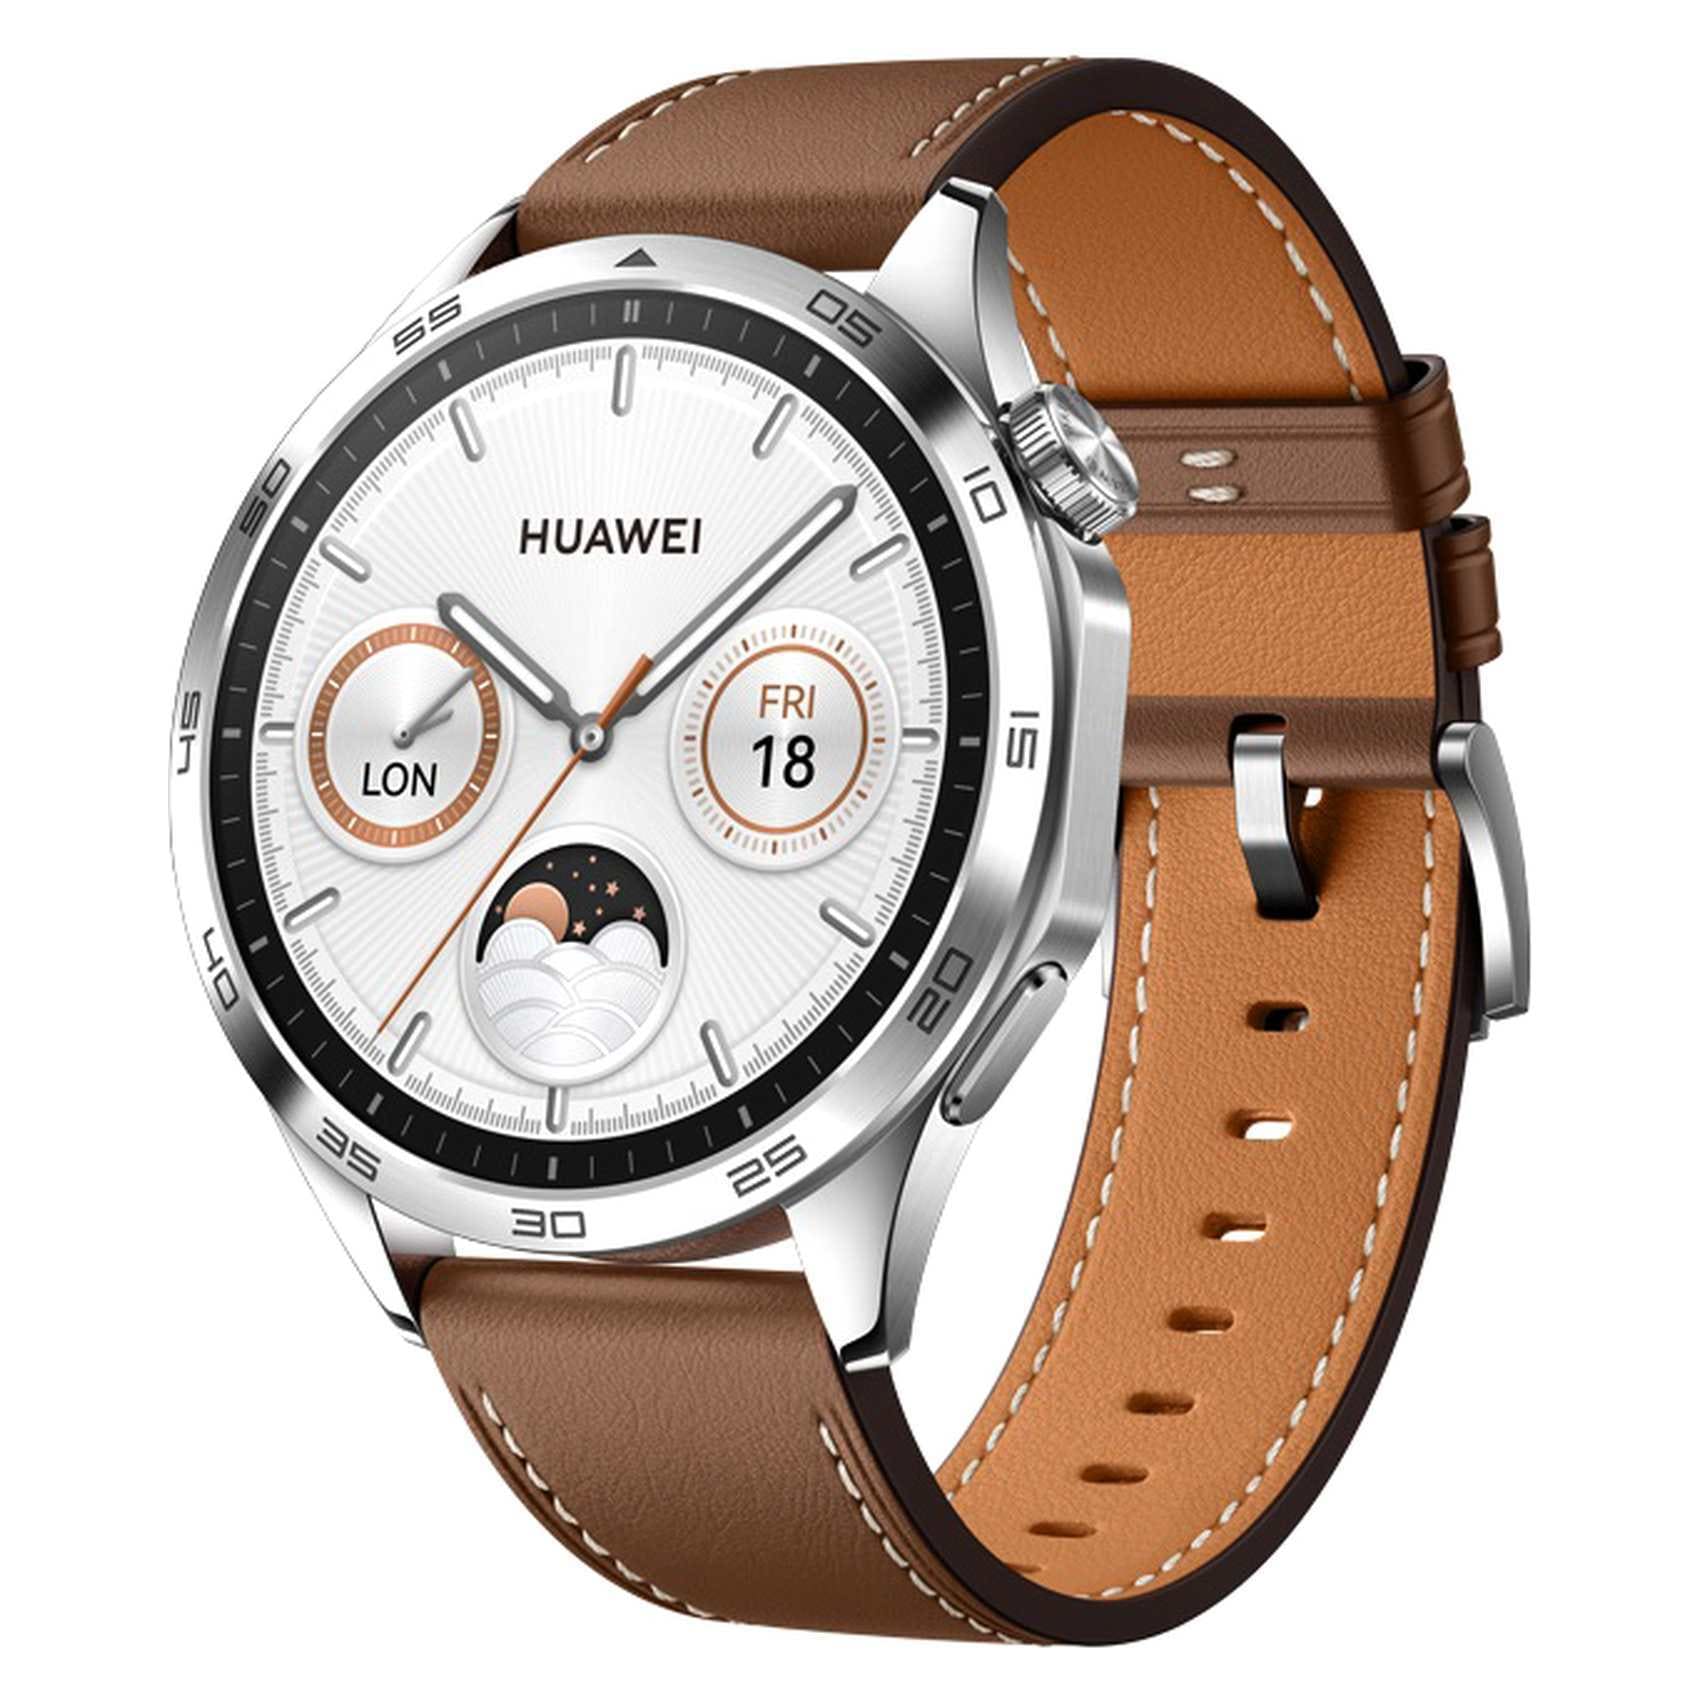 Buy Huawei GT4 Smartwatch GPS Phoenix Brown 46mm Online - Shop Smartphones,  Tablets & Wearables on Carrefour UAE